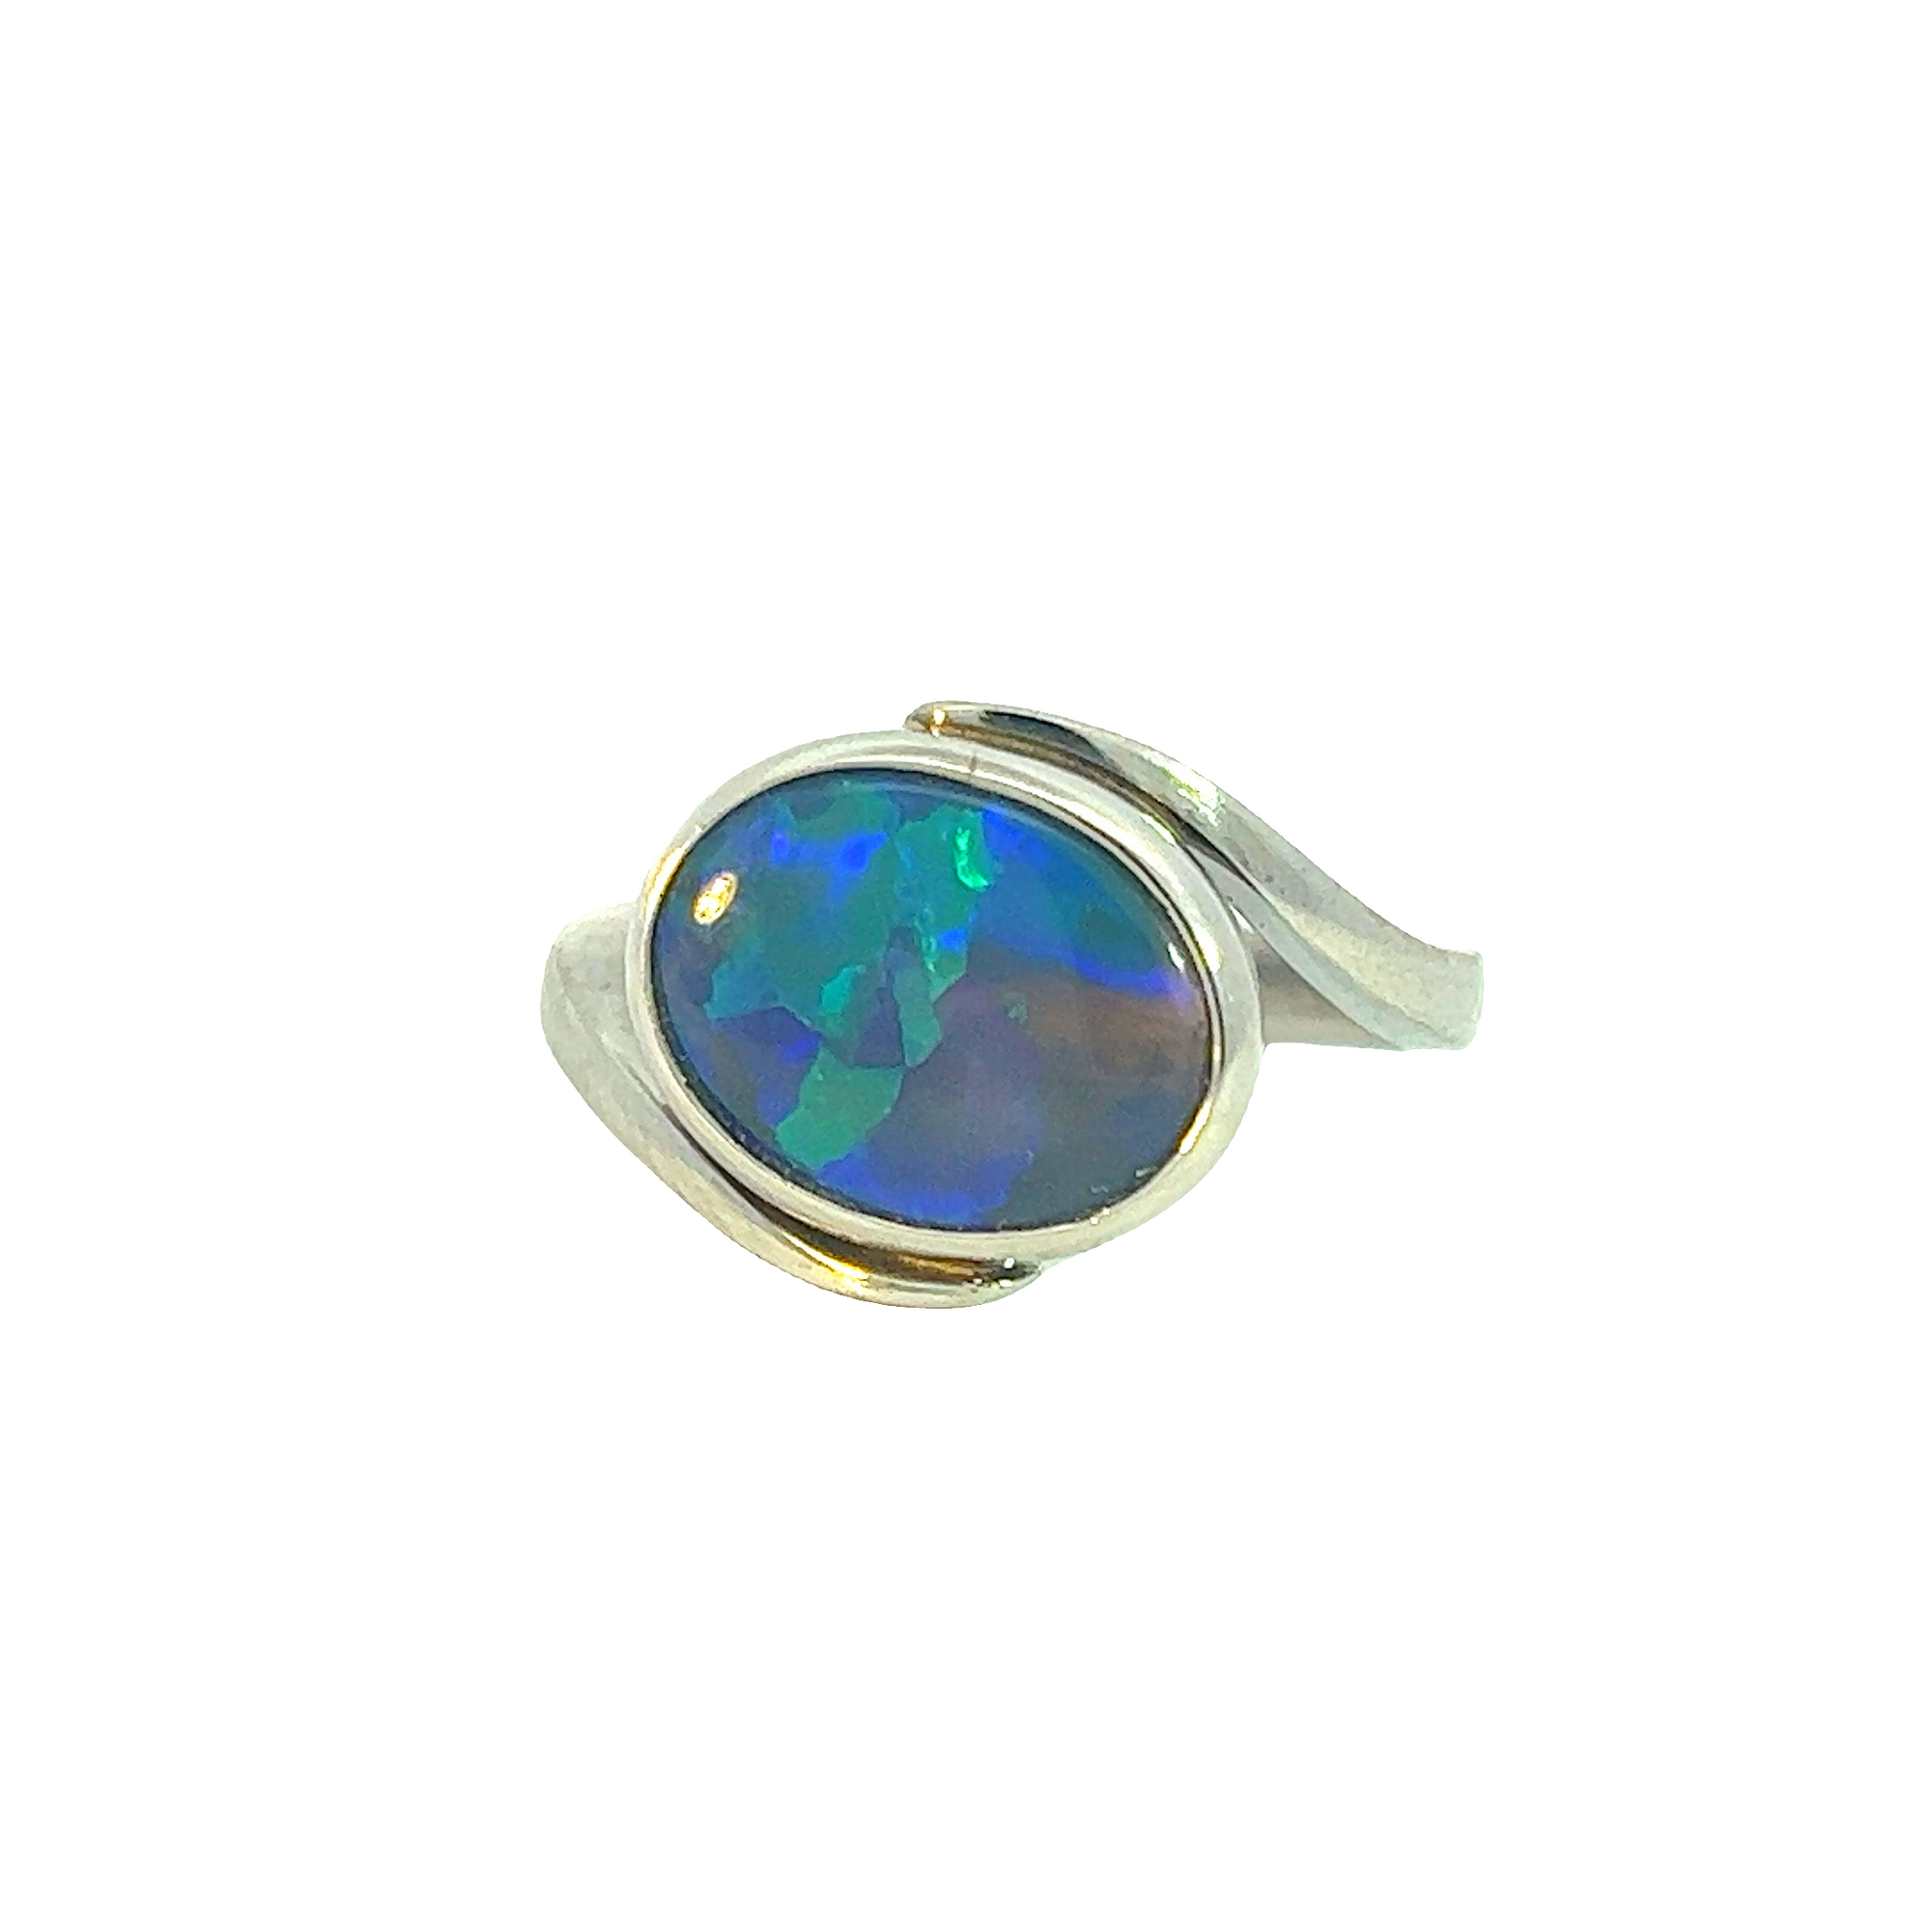 18kt White Gold cross over Black Opal 1.5ct Blue Green solitaire ring - Masterpiece Jewellery Opal & Gems Sydney Australia | Online Shop